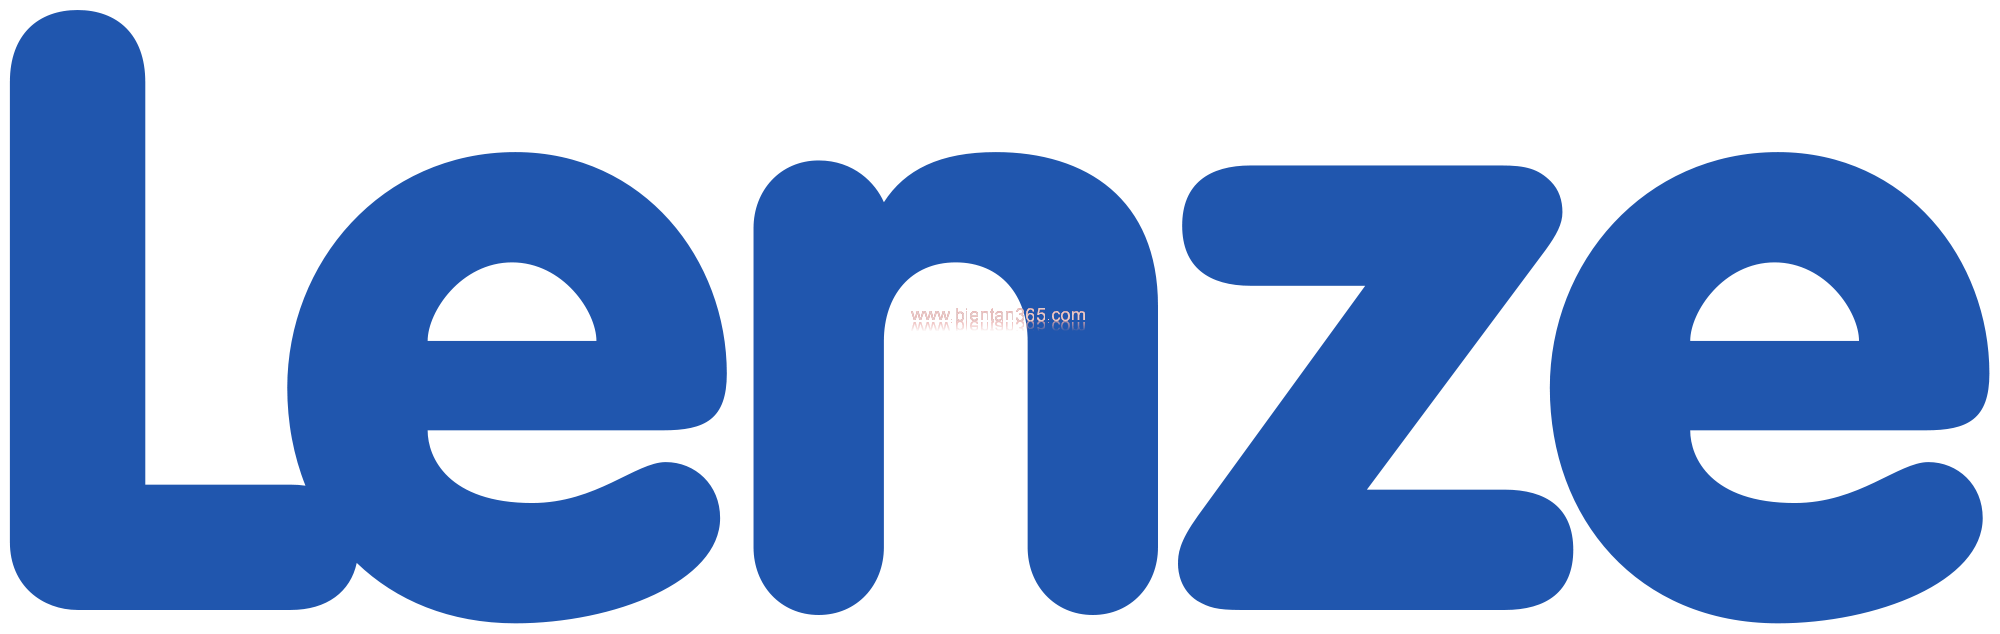 Lenze-logo